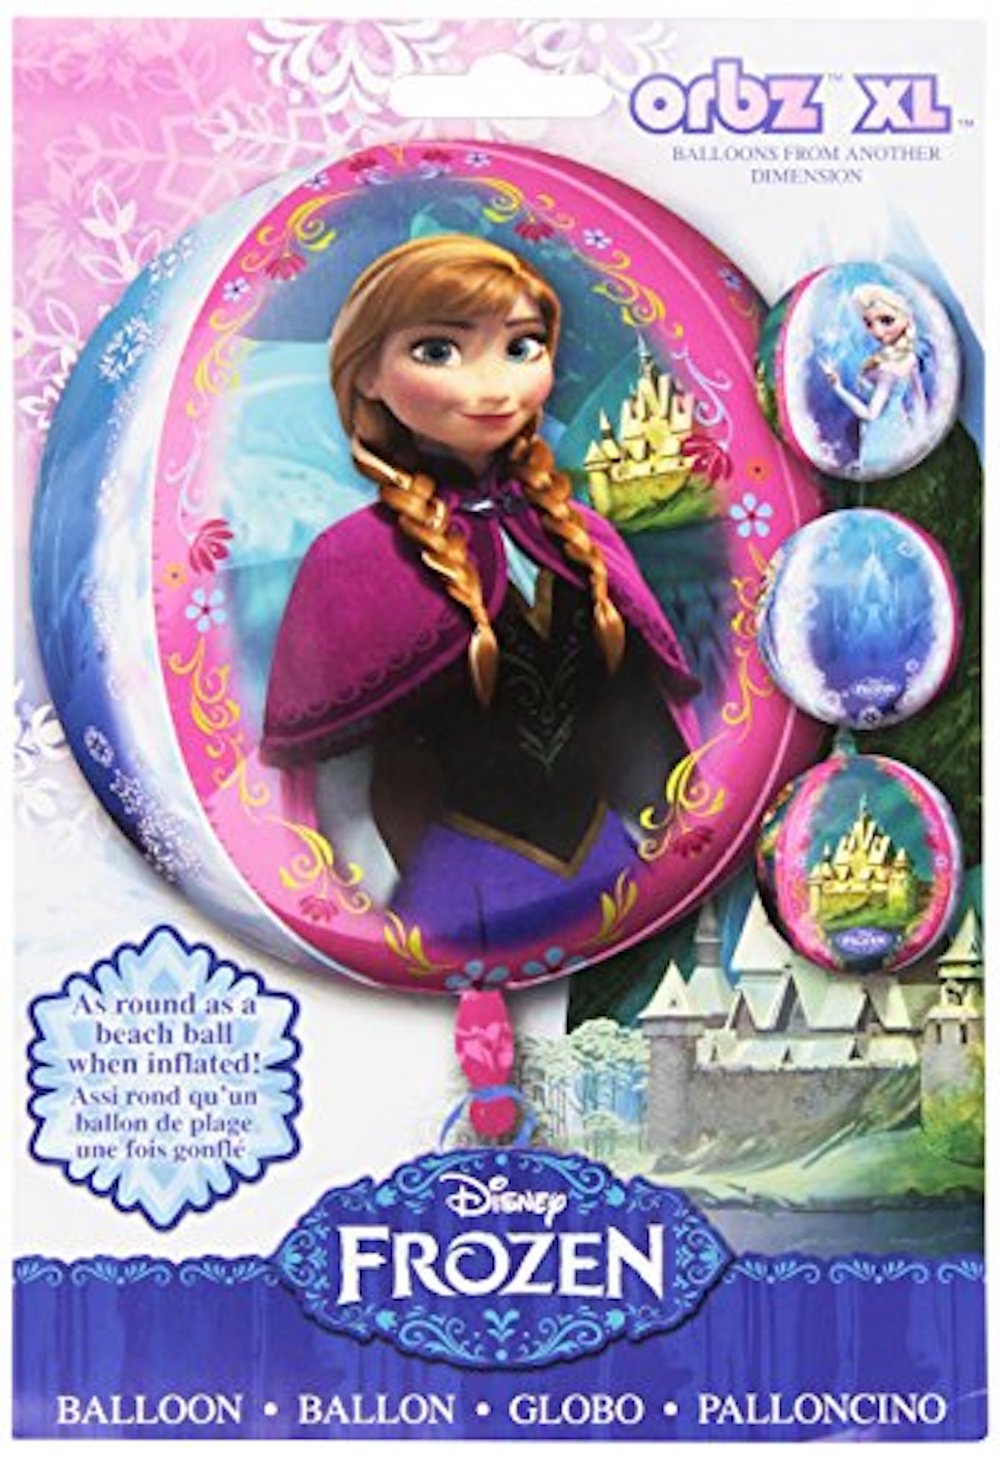 Folienballon Orbz - Disney Frozen - 40cm